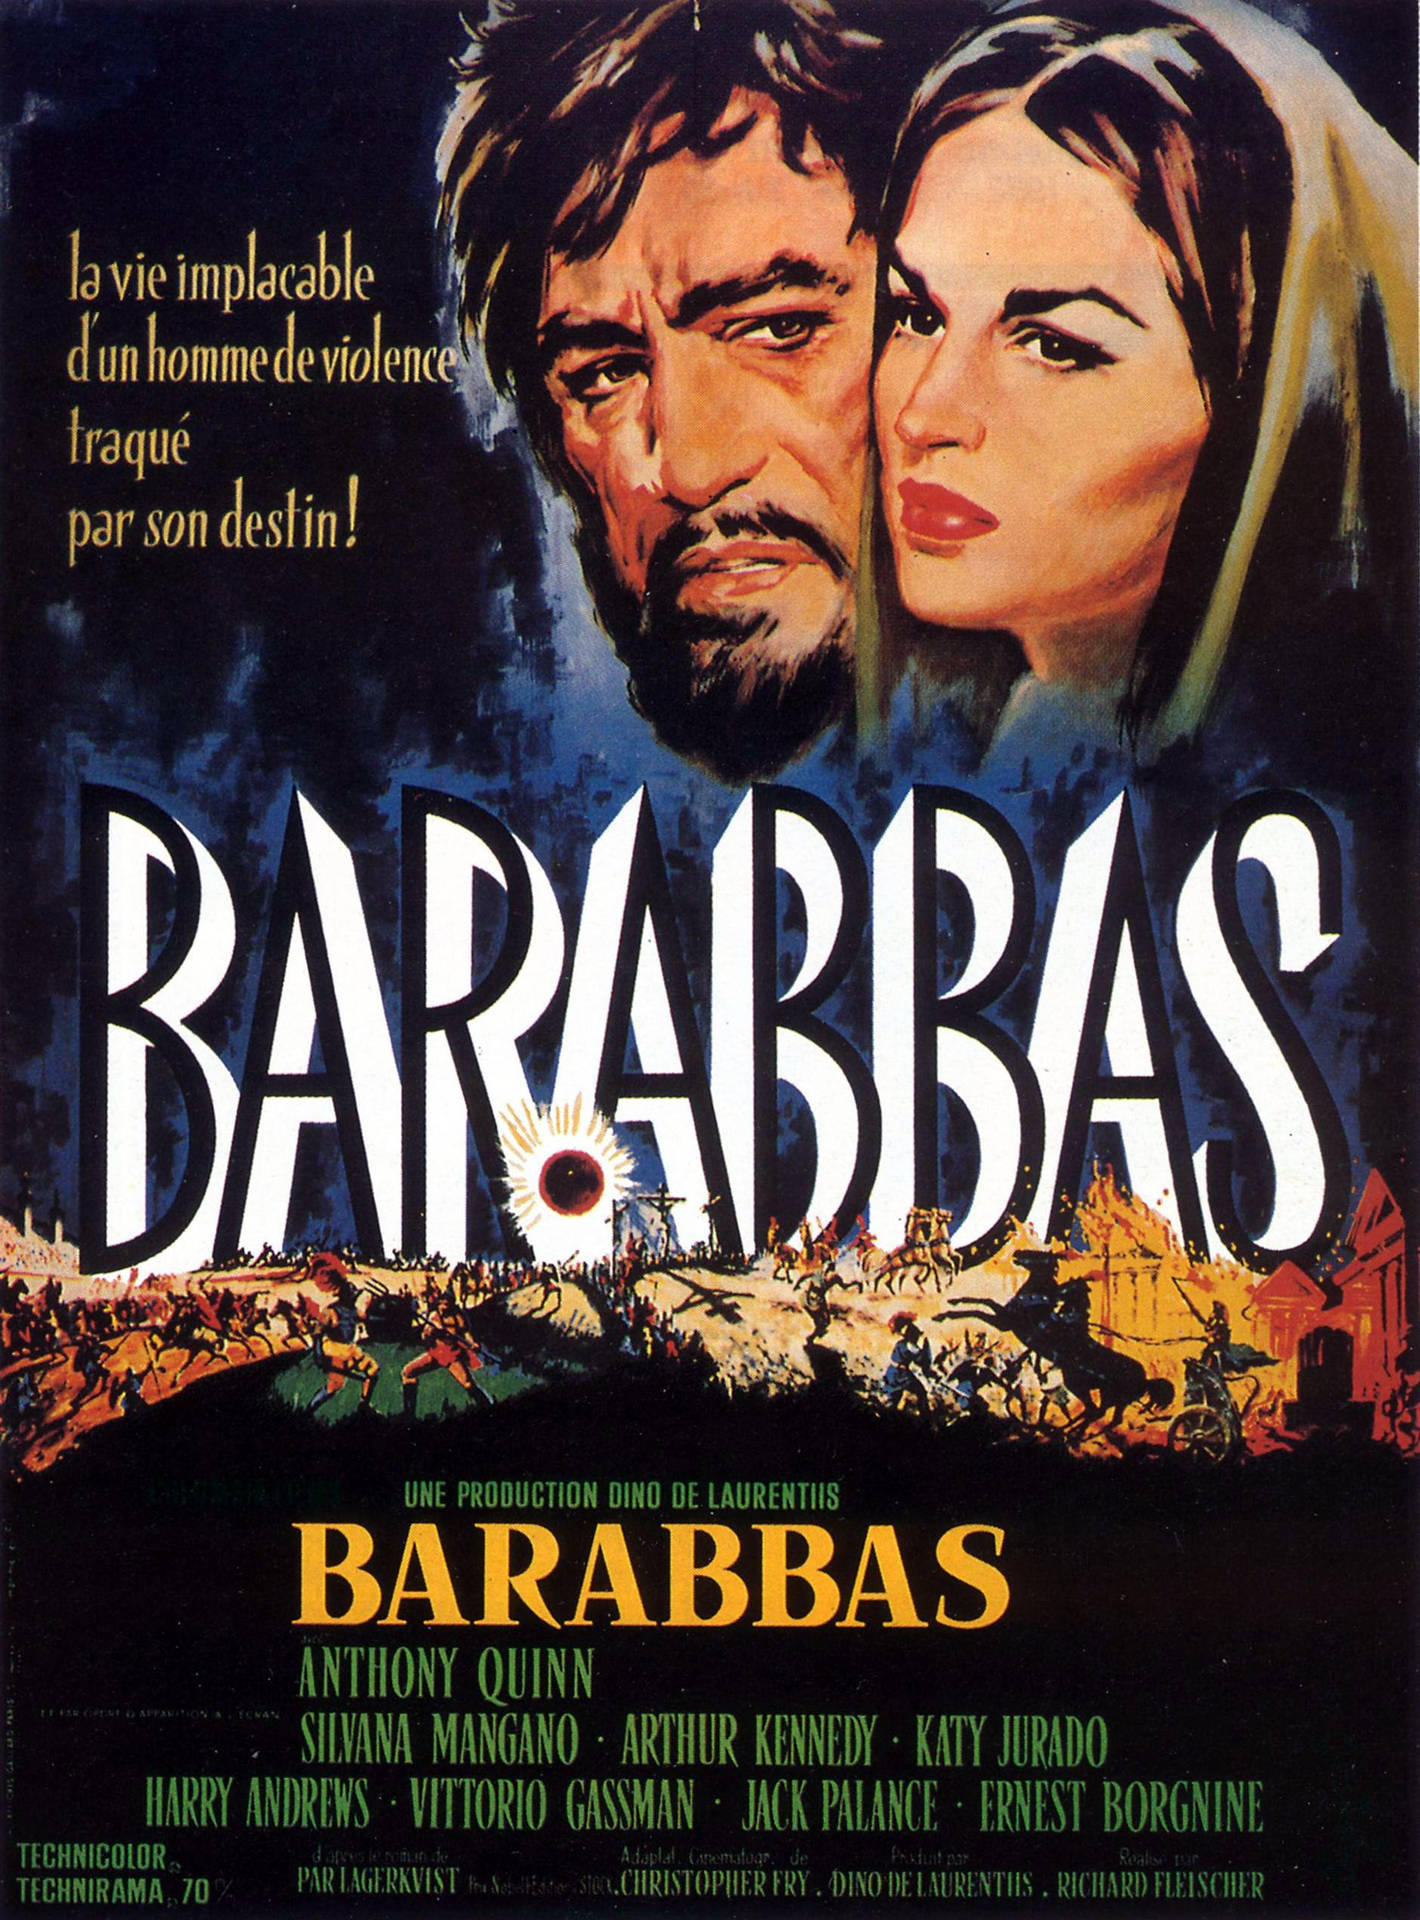 Anthonyquinn Barabbas The Movie: Anthony Quinn Barabbas Filmen Wallpaper